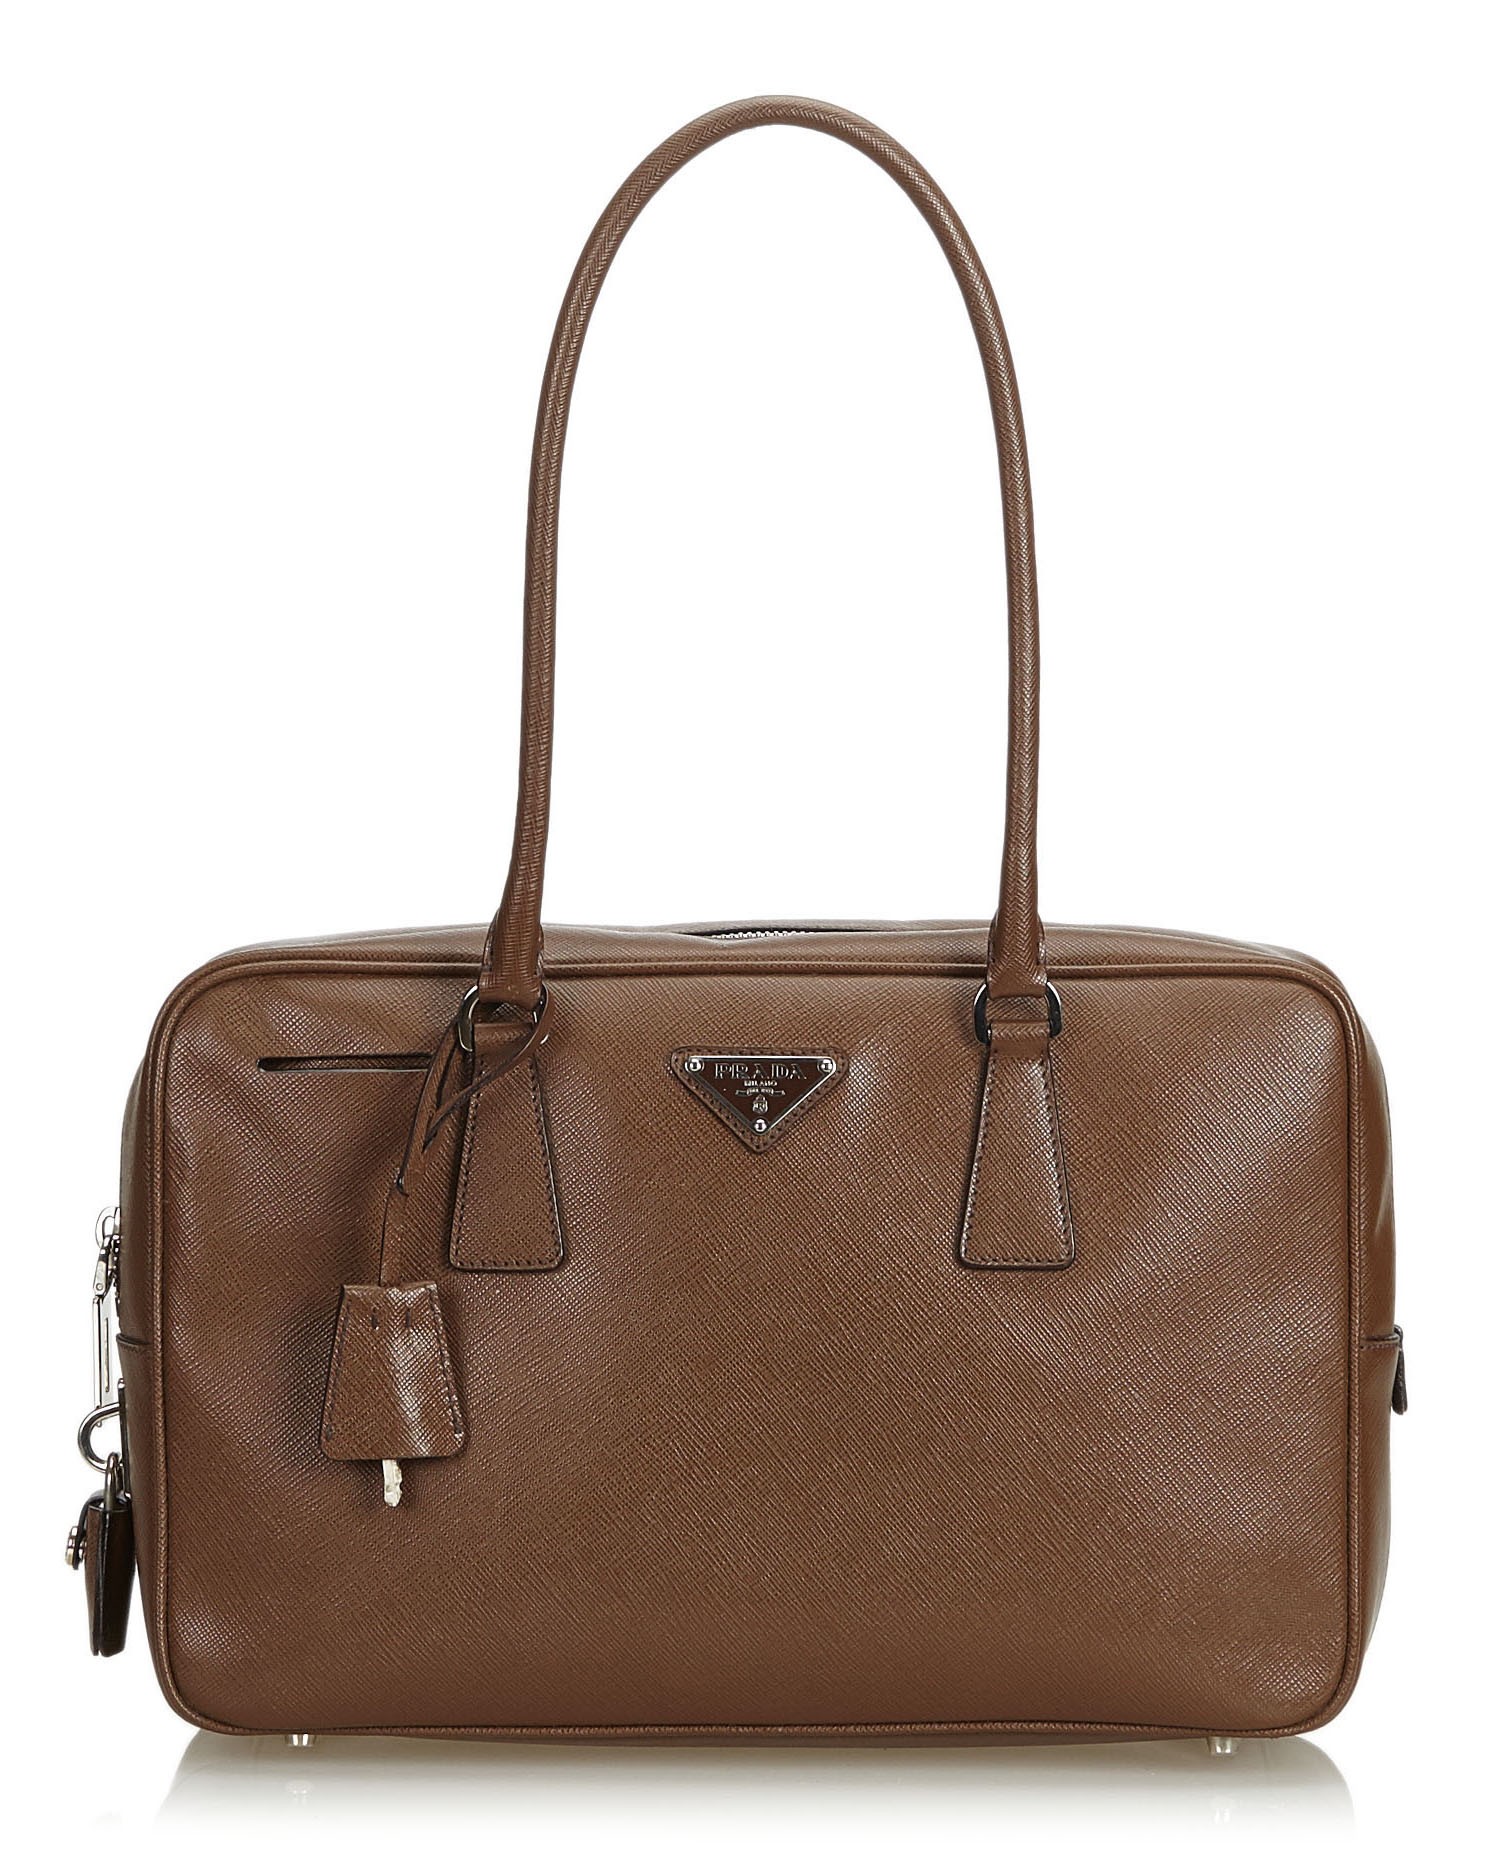 Vintage Prada Saffiano Leather Bag